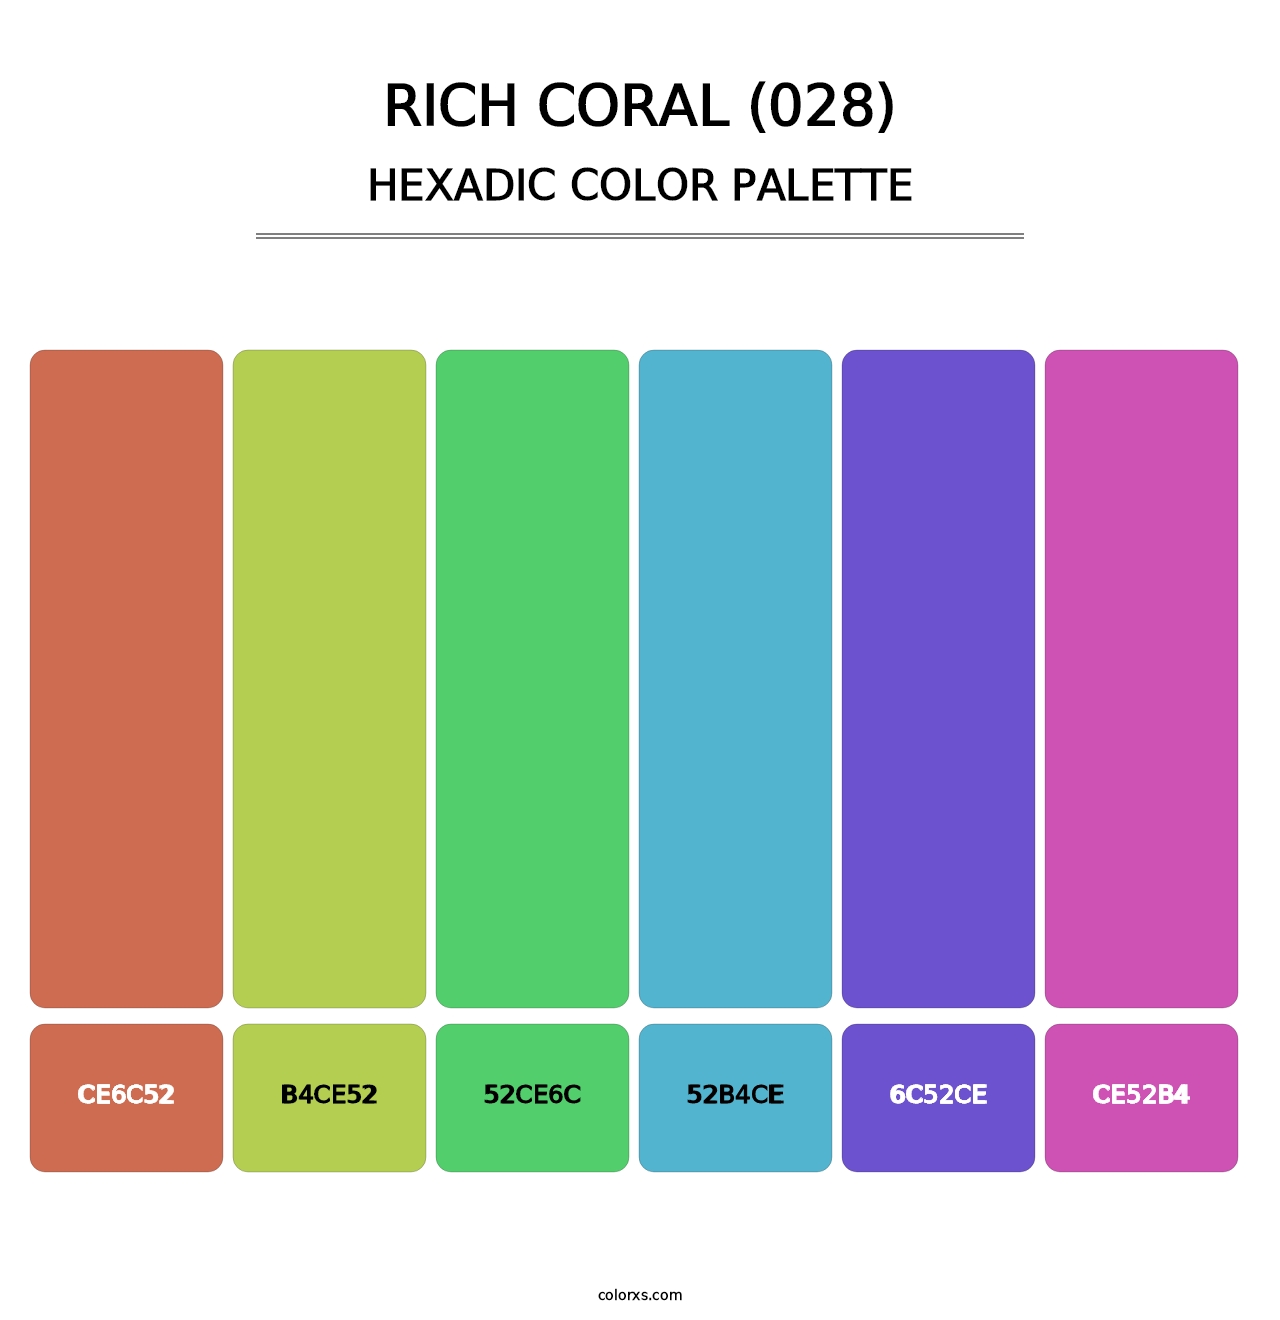 Rich Coral (028) - Hexadic Color Palette